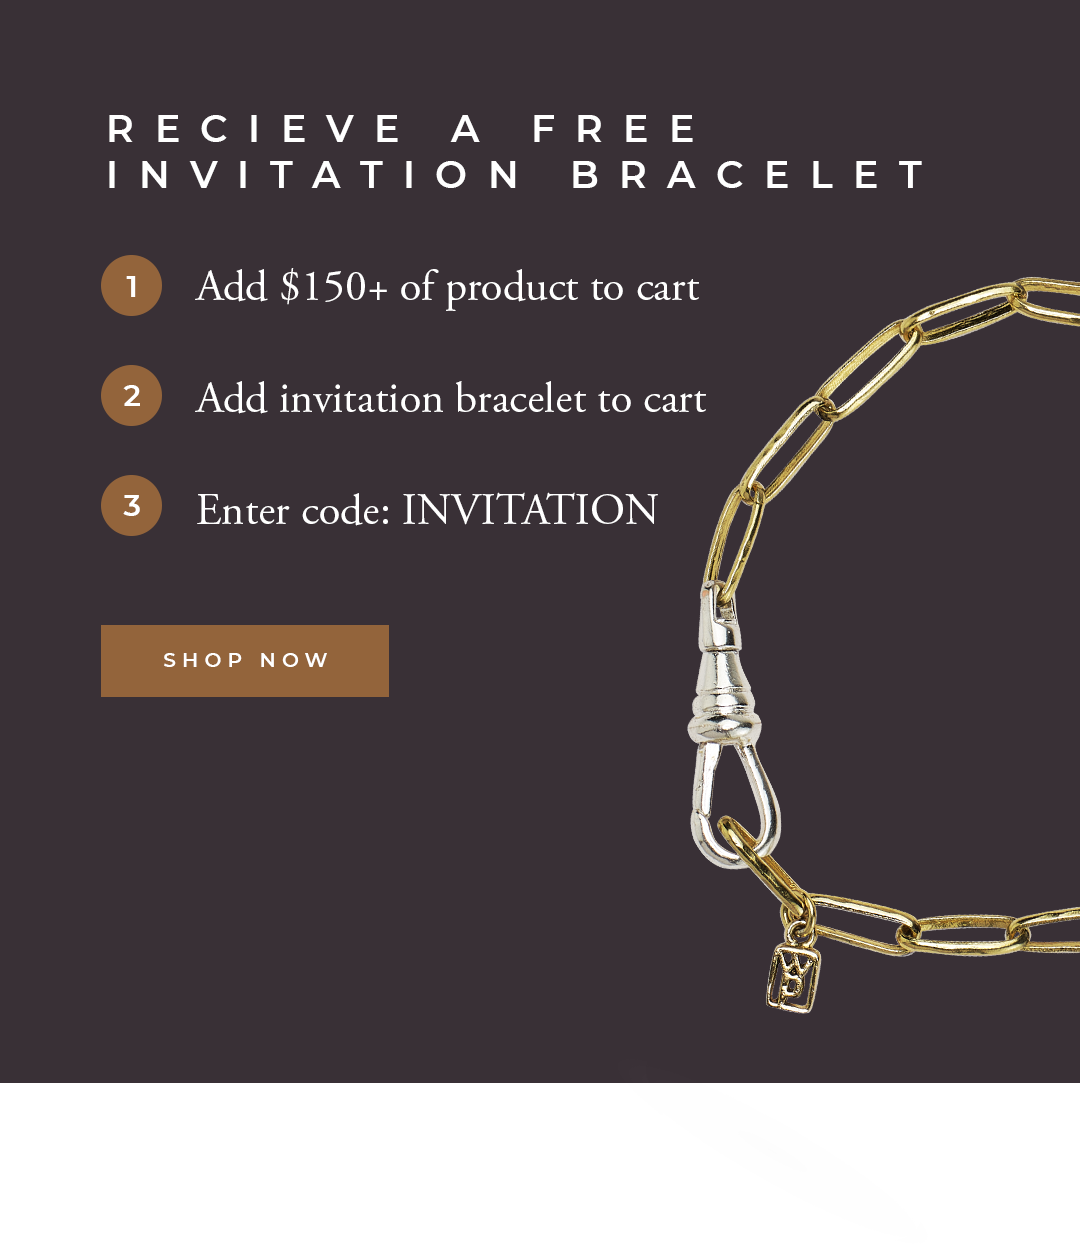 The Invitation Bracelet